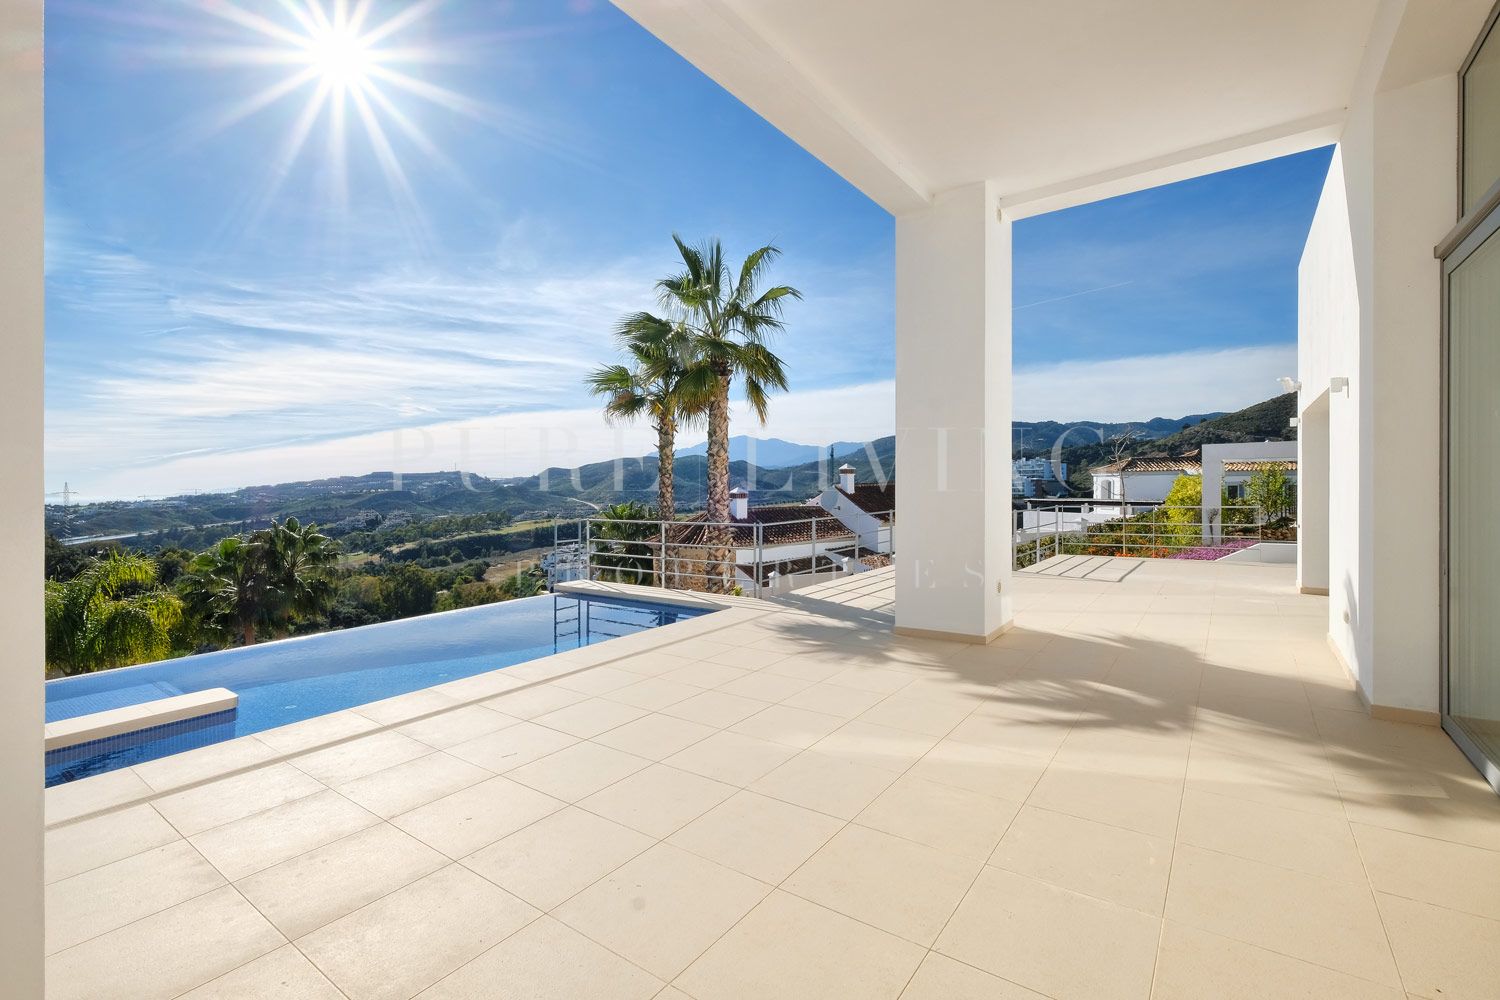 Newly built contemporary four bedroom villa with stunning views in Puerto del Capitan, Benahavis